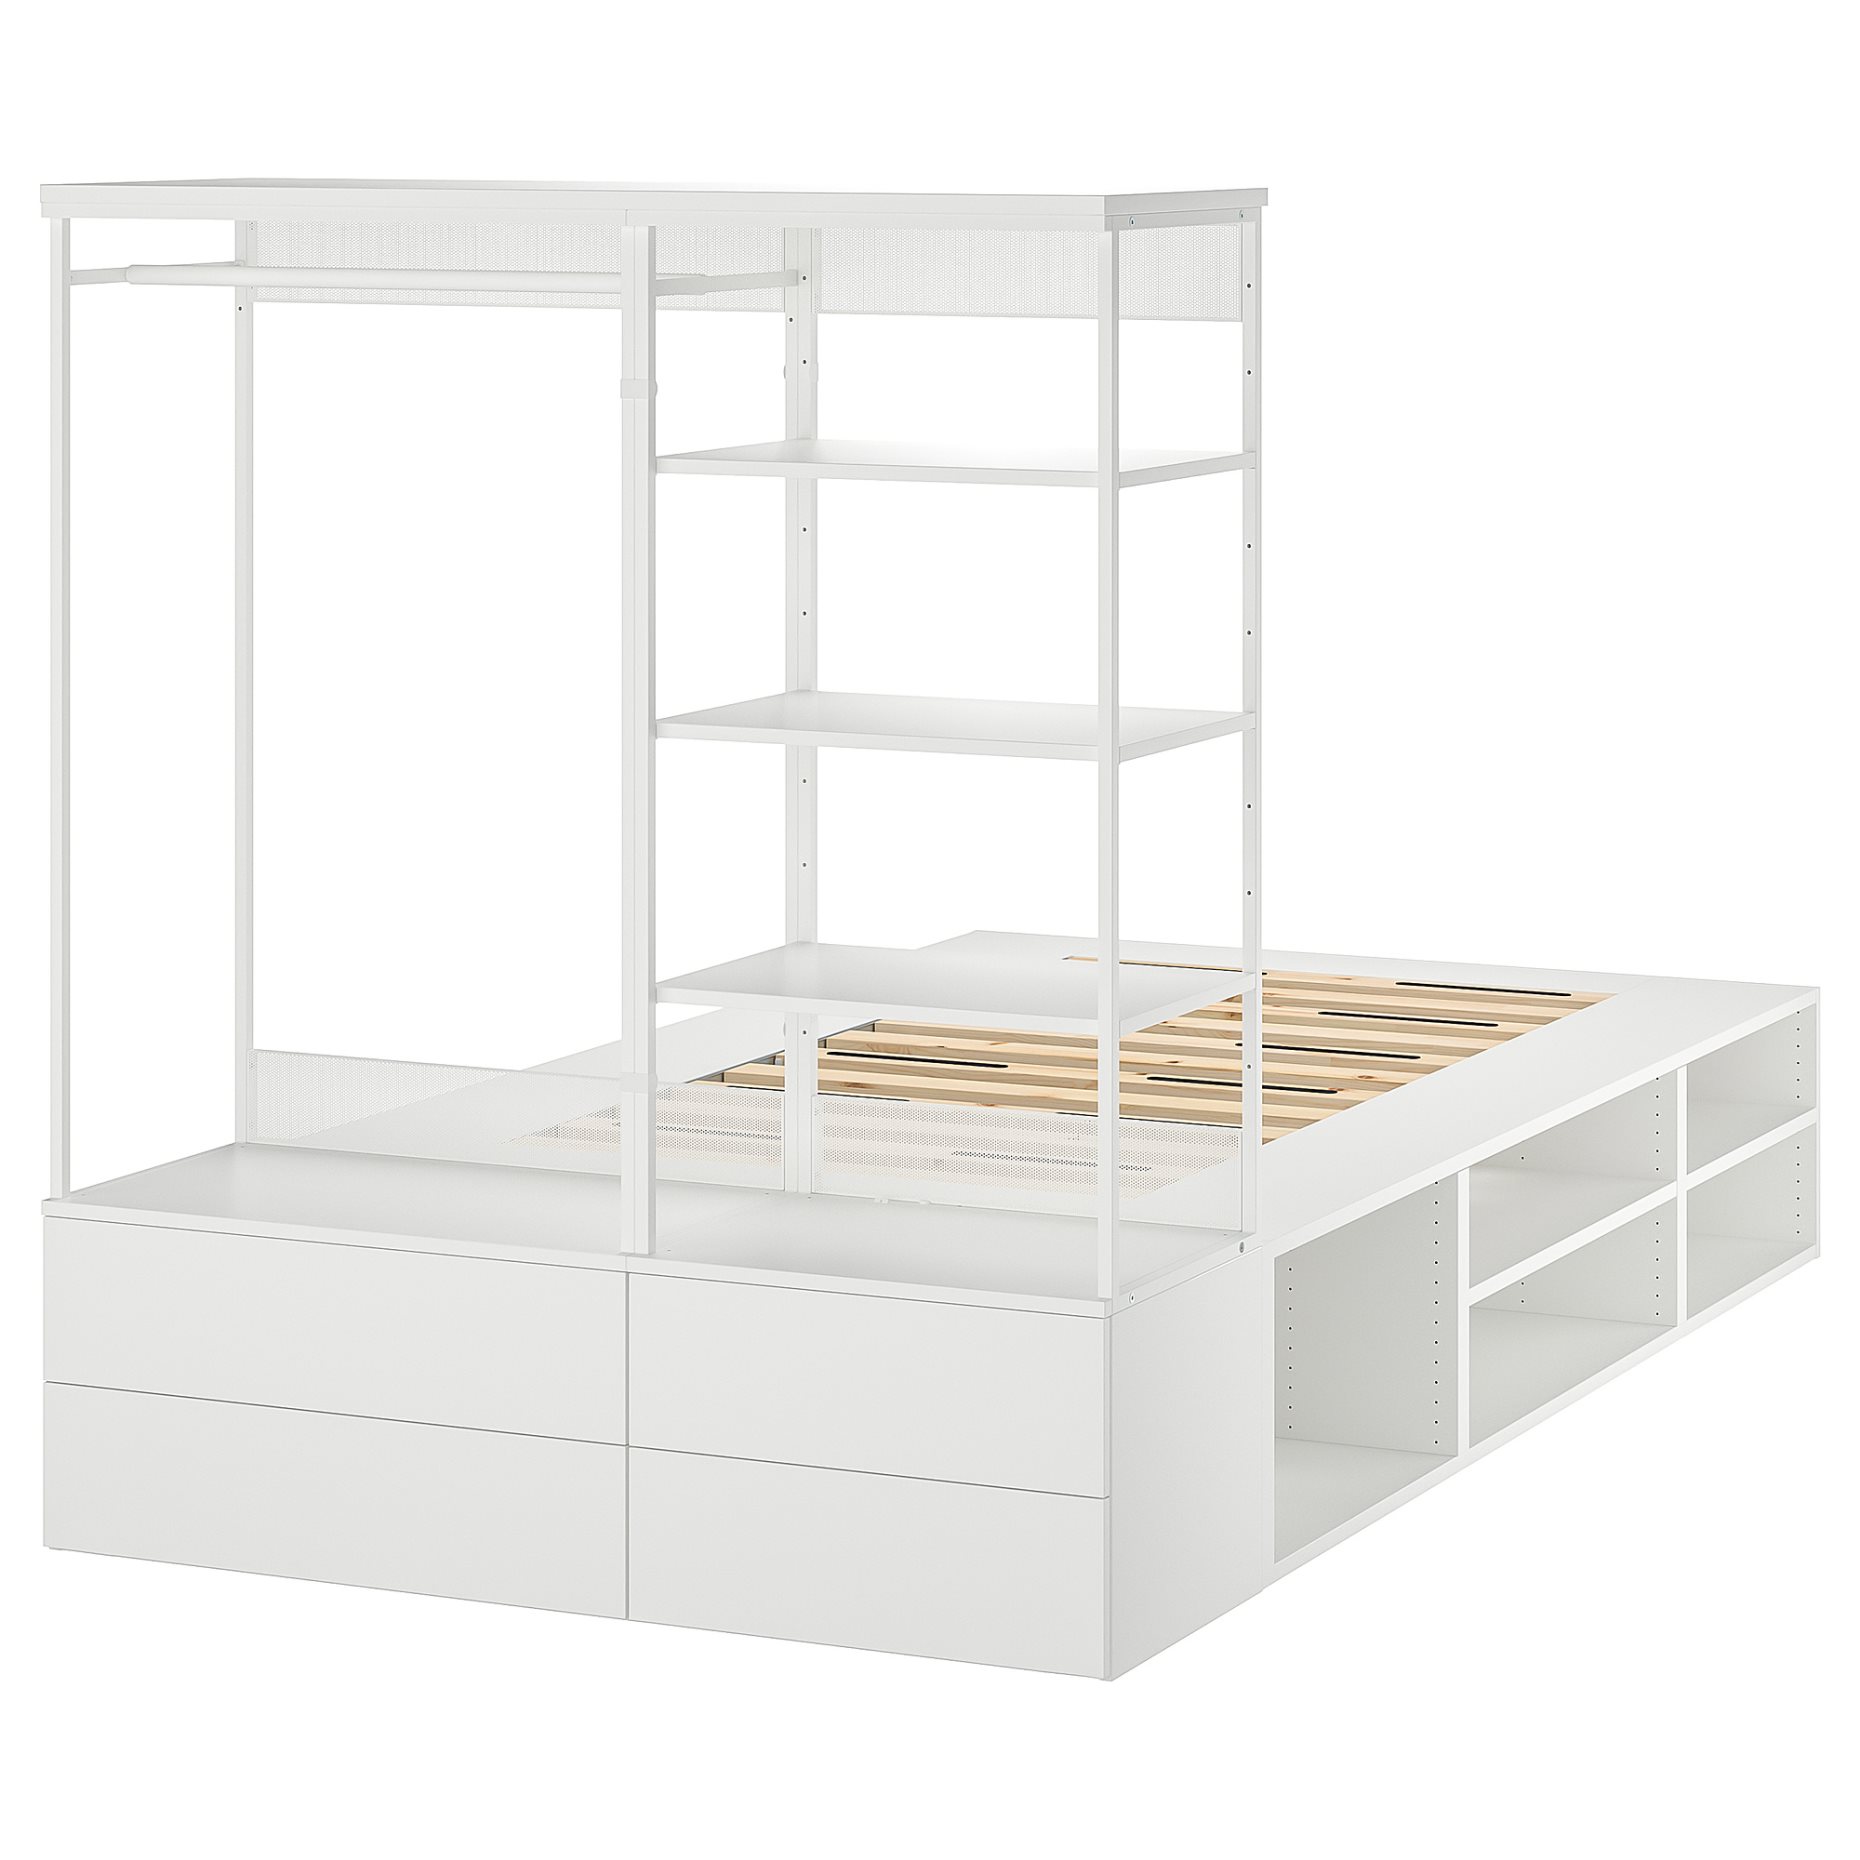 PLATSA, κρεβάτι με 4 συρτάρια, 140x244x163 cm, 893.264.63